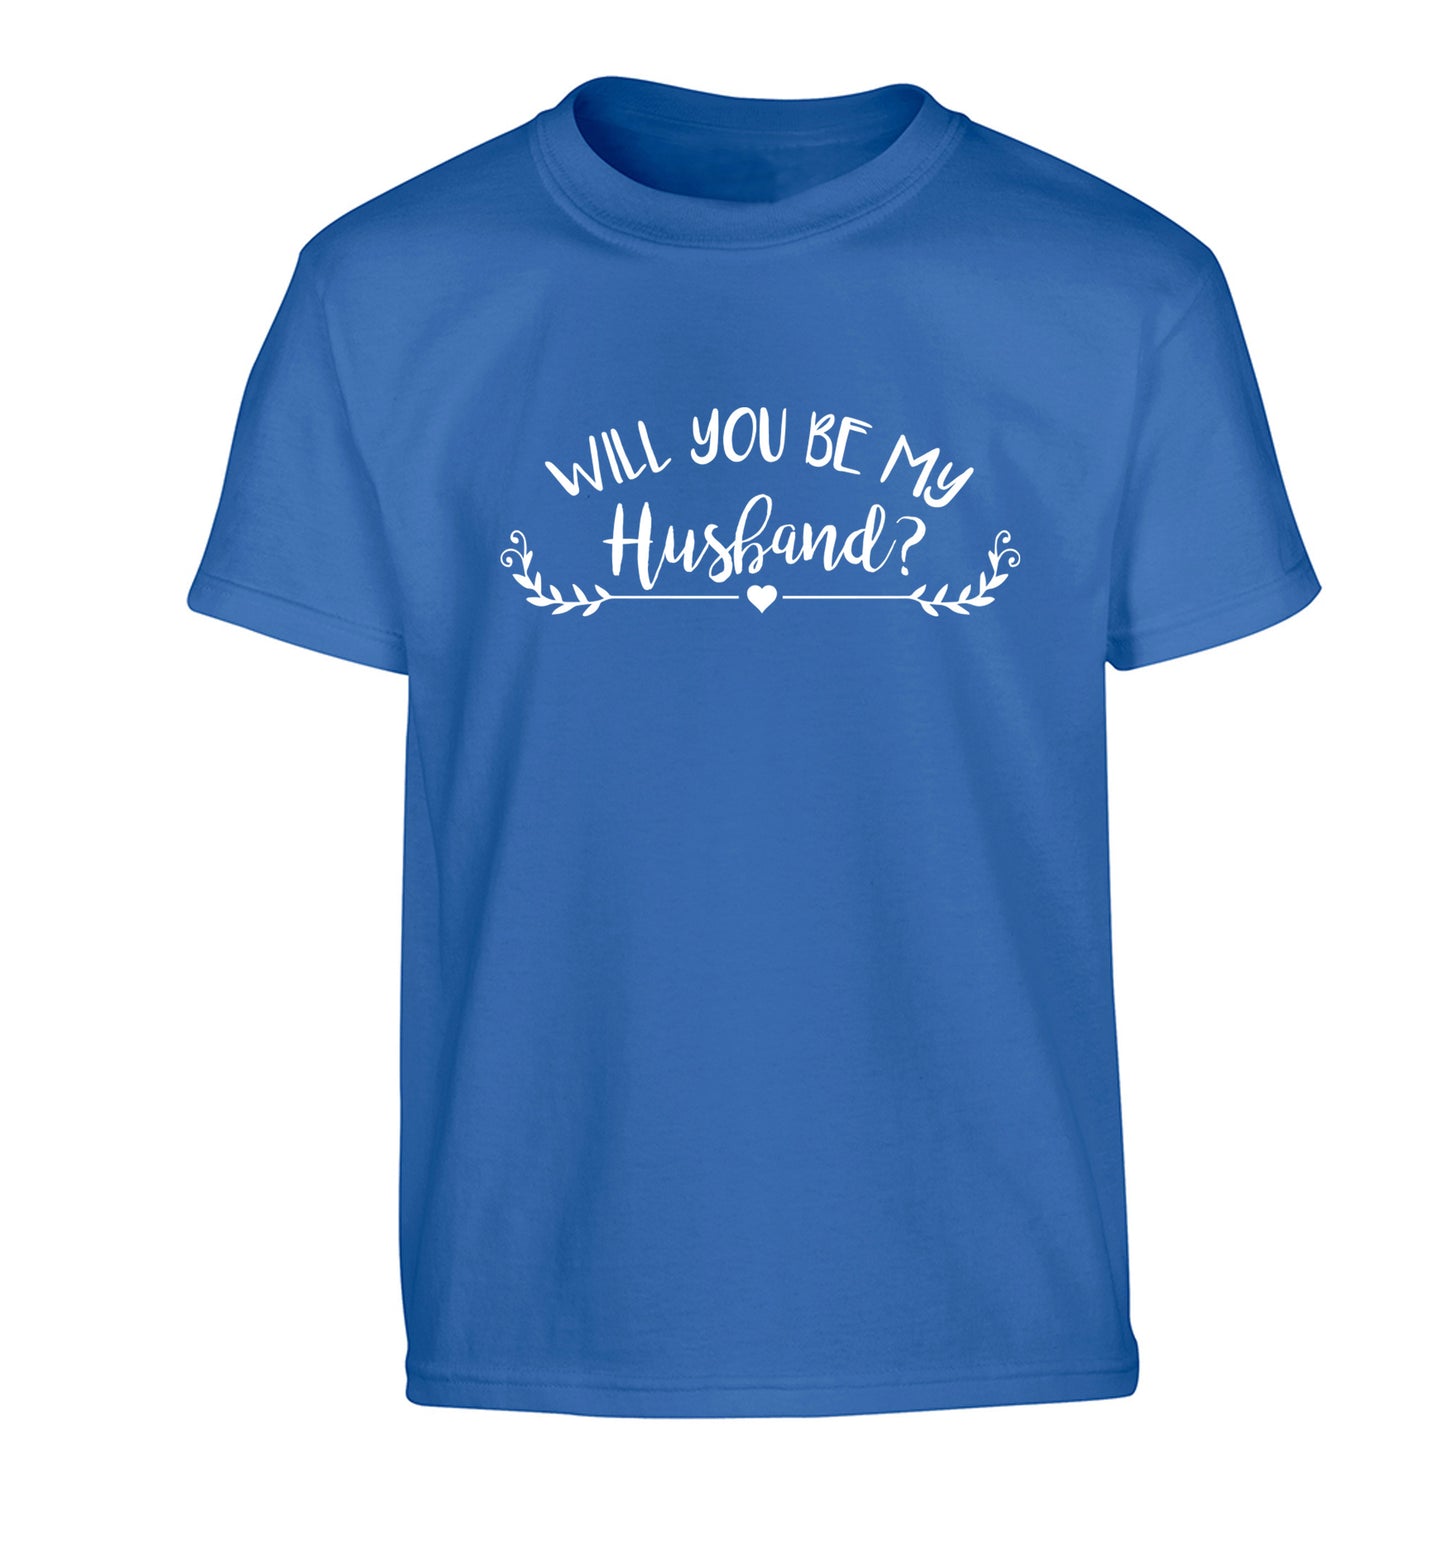 Will you be my husband? Children's blue Tshirt 12-14 Years